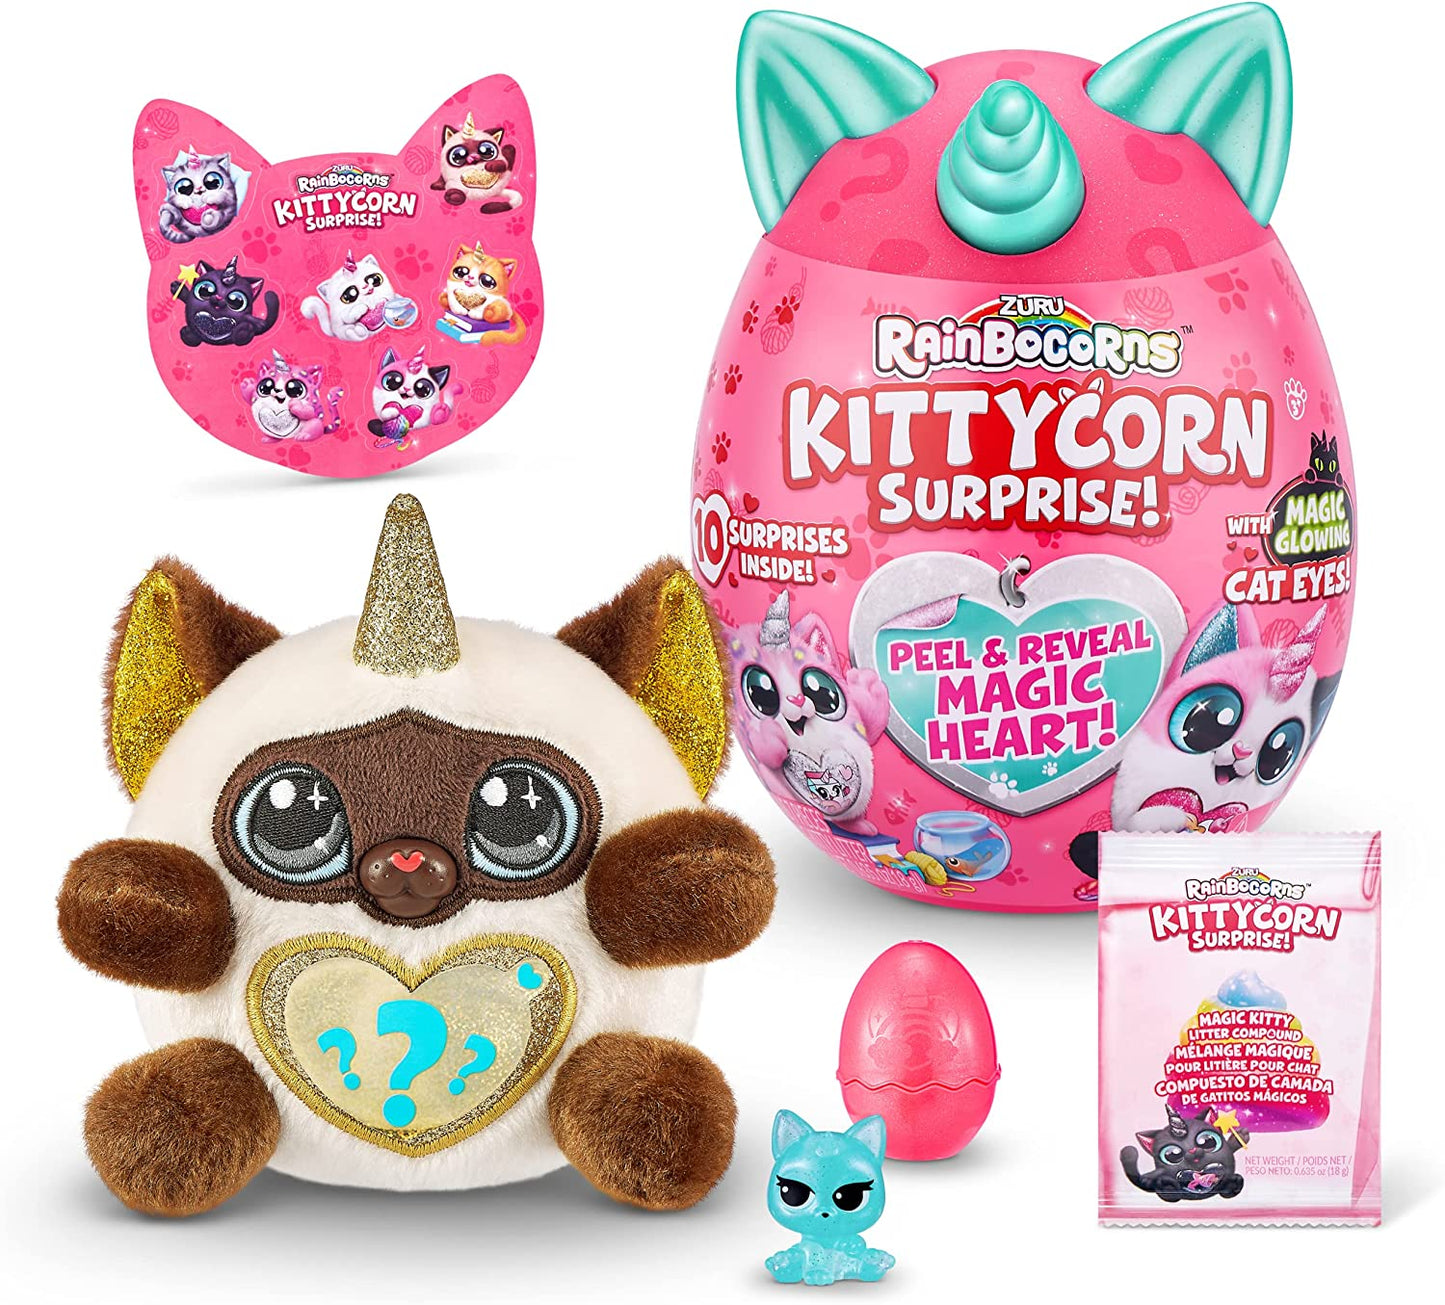 Rainbocorns Kittycorn Surprise Series 1 by ZURU, Collectible Plush Stuffed Animal, Surprise Egg - Random Style Pick